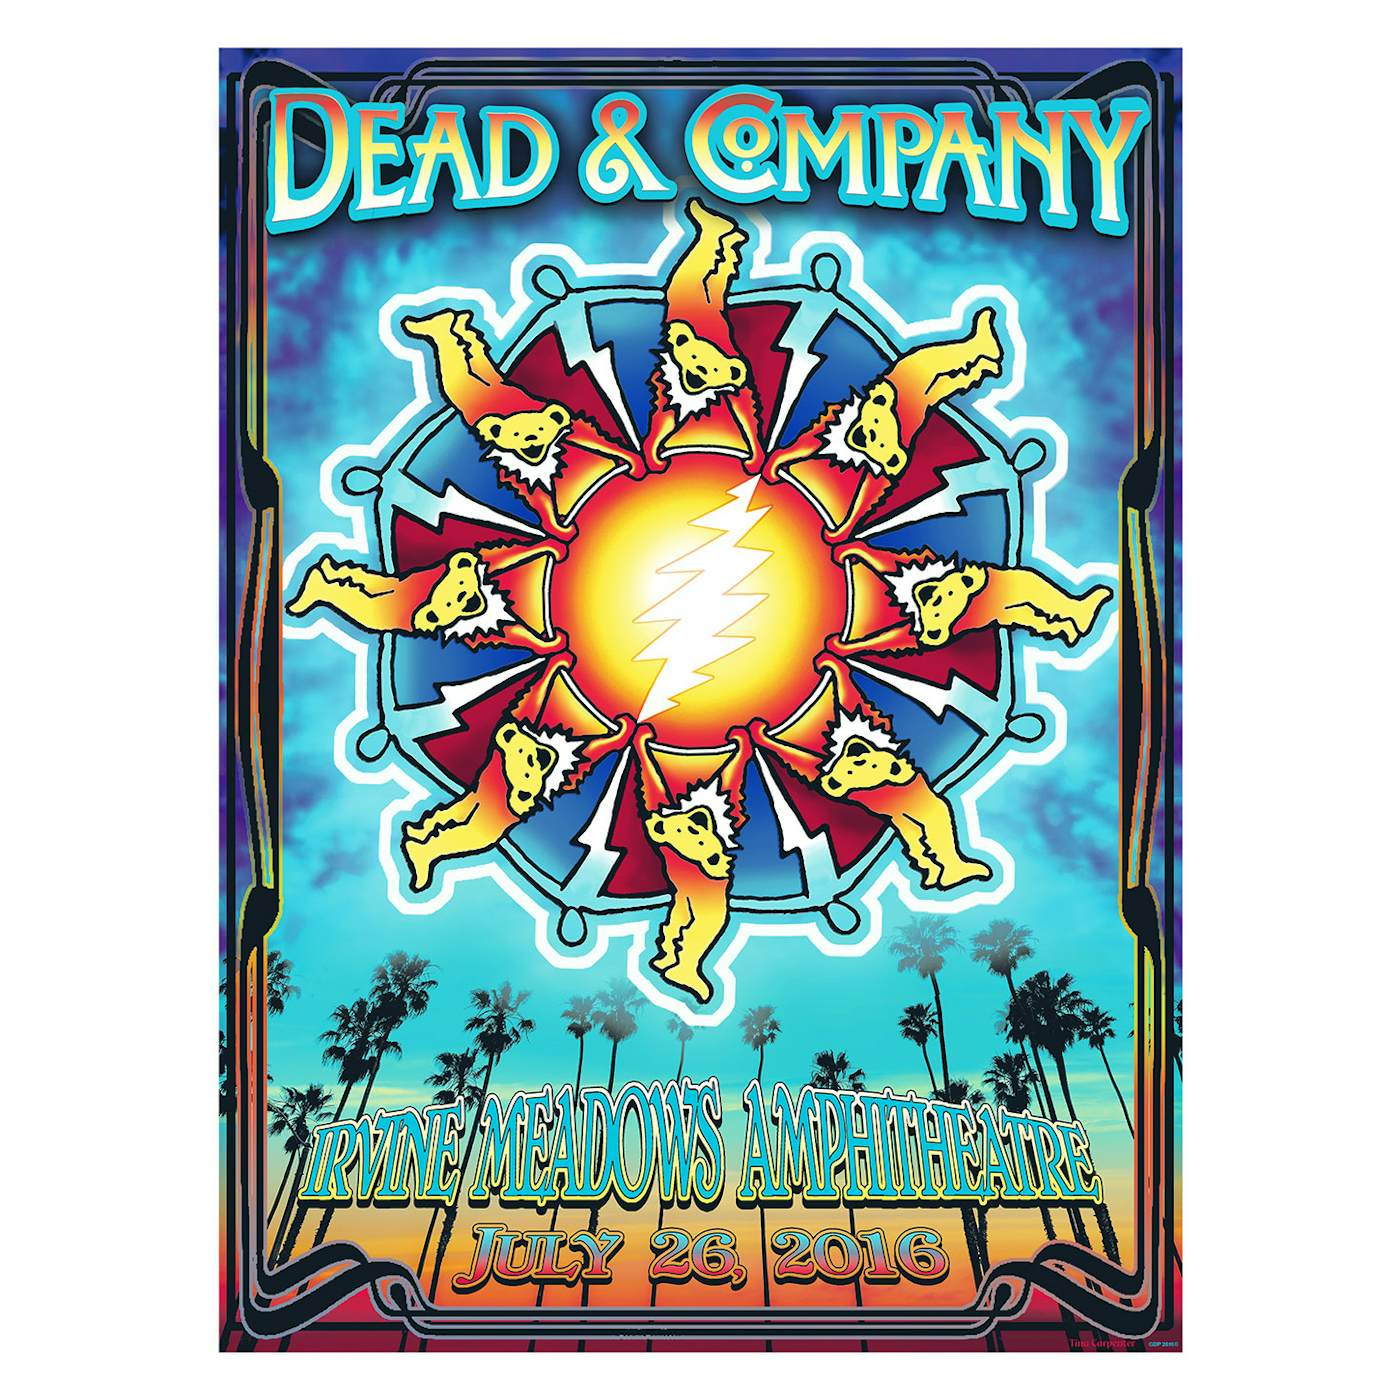 Dead & Company Irvine, CA Exclusive Event Poster